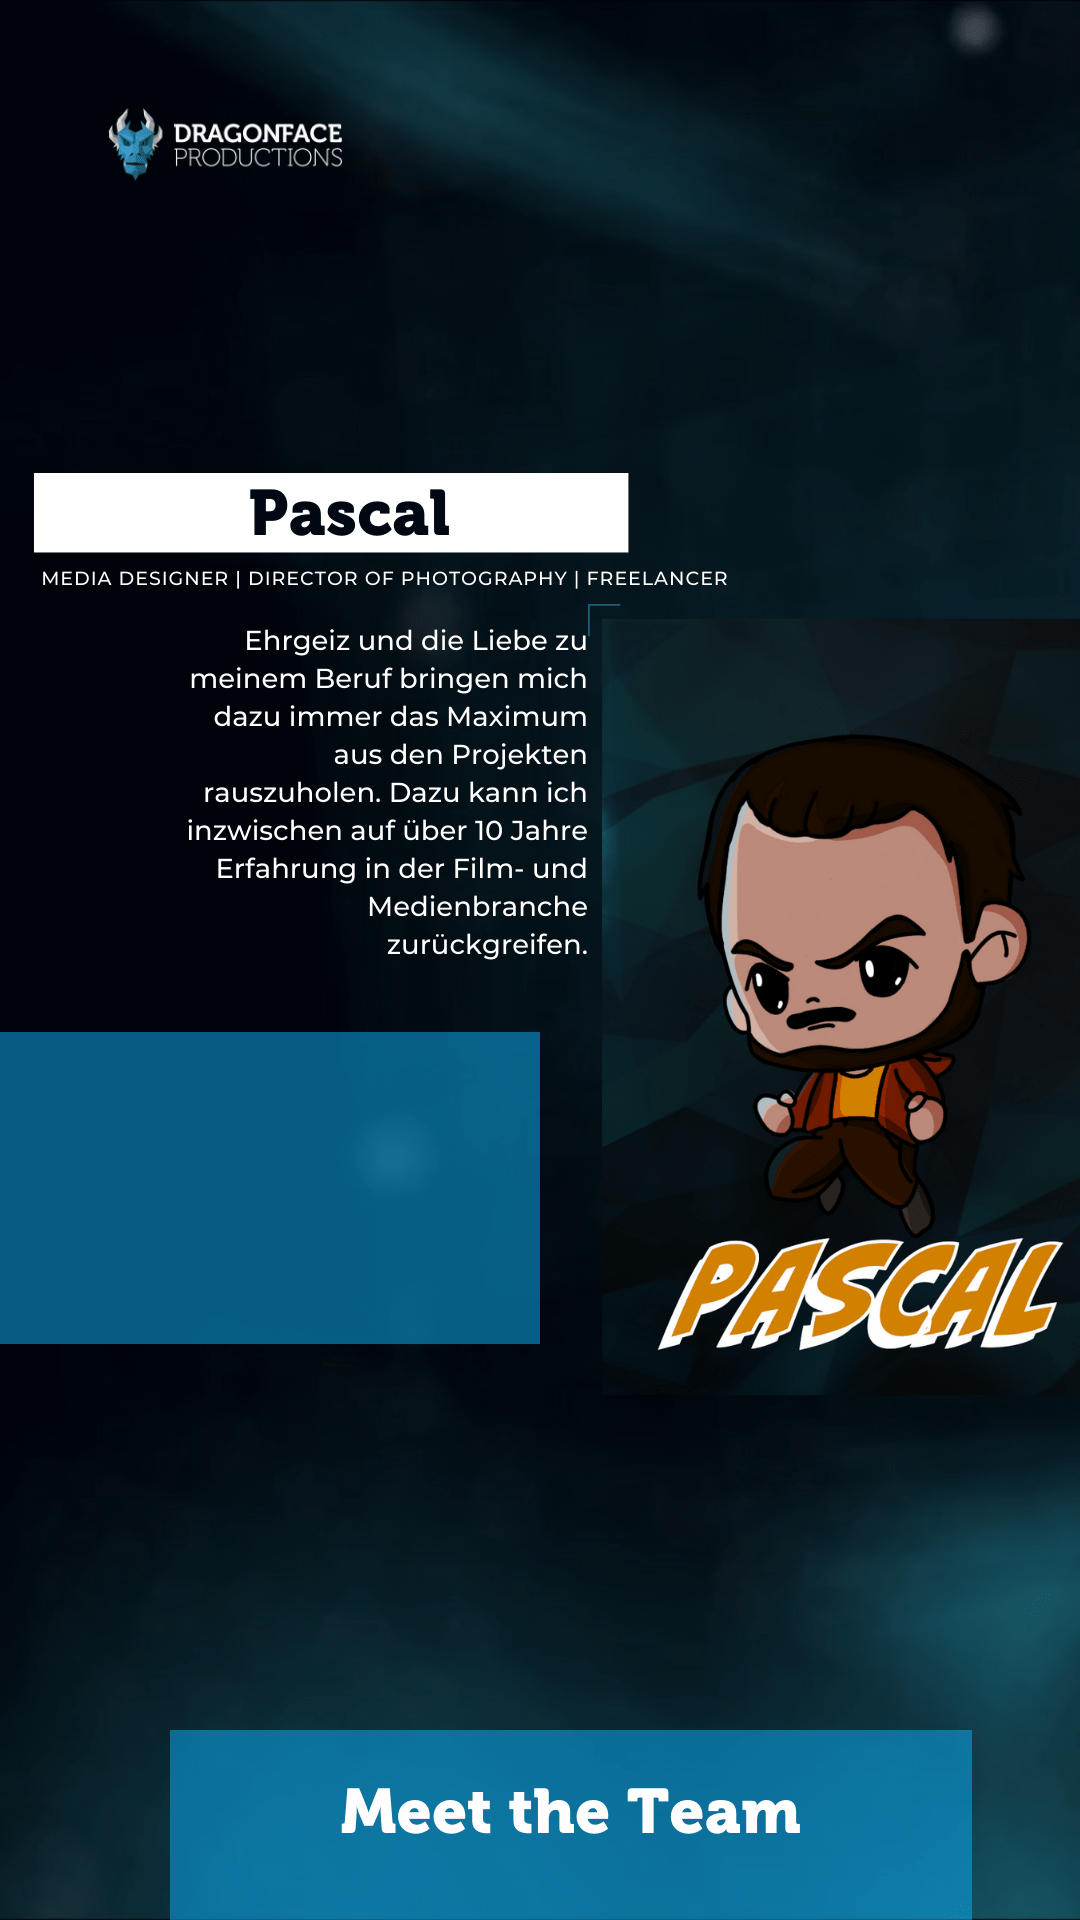 Team Pascal